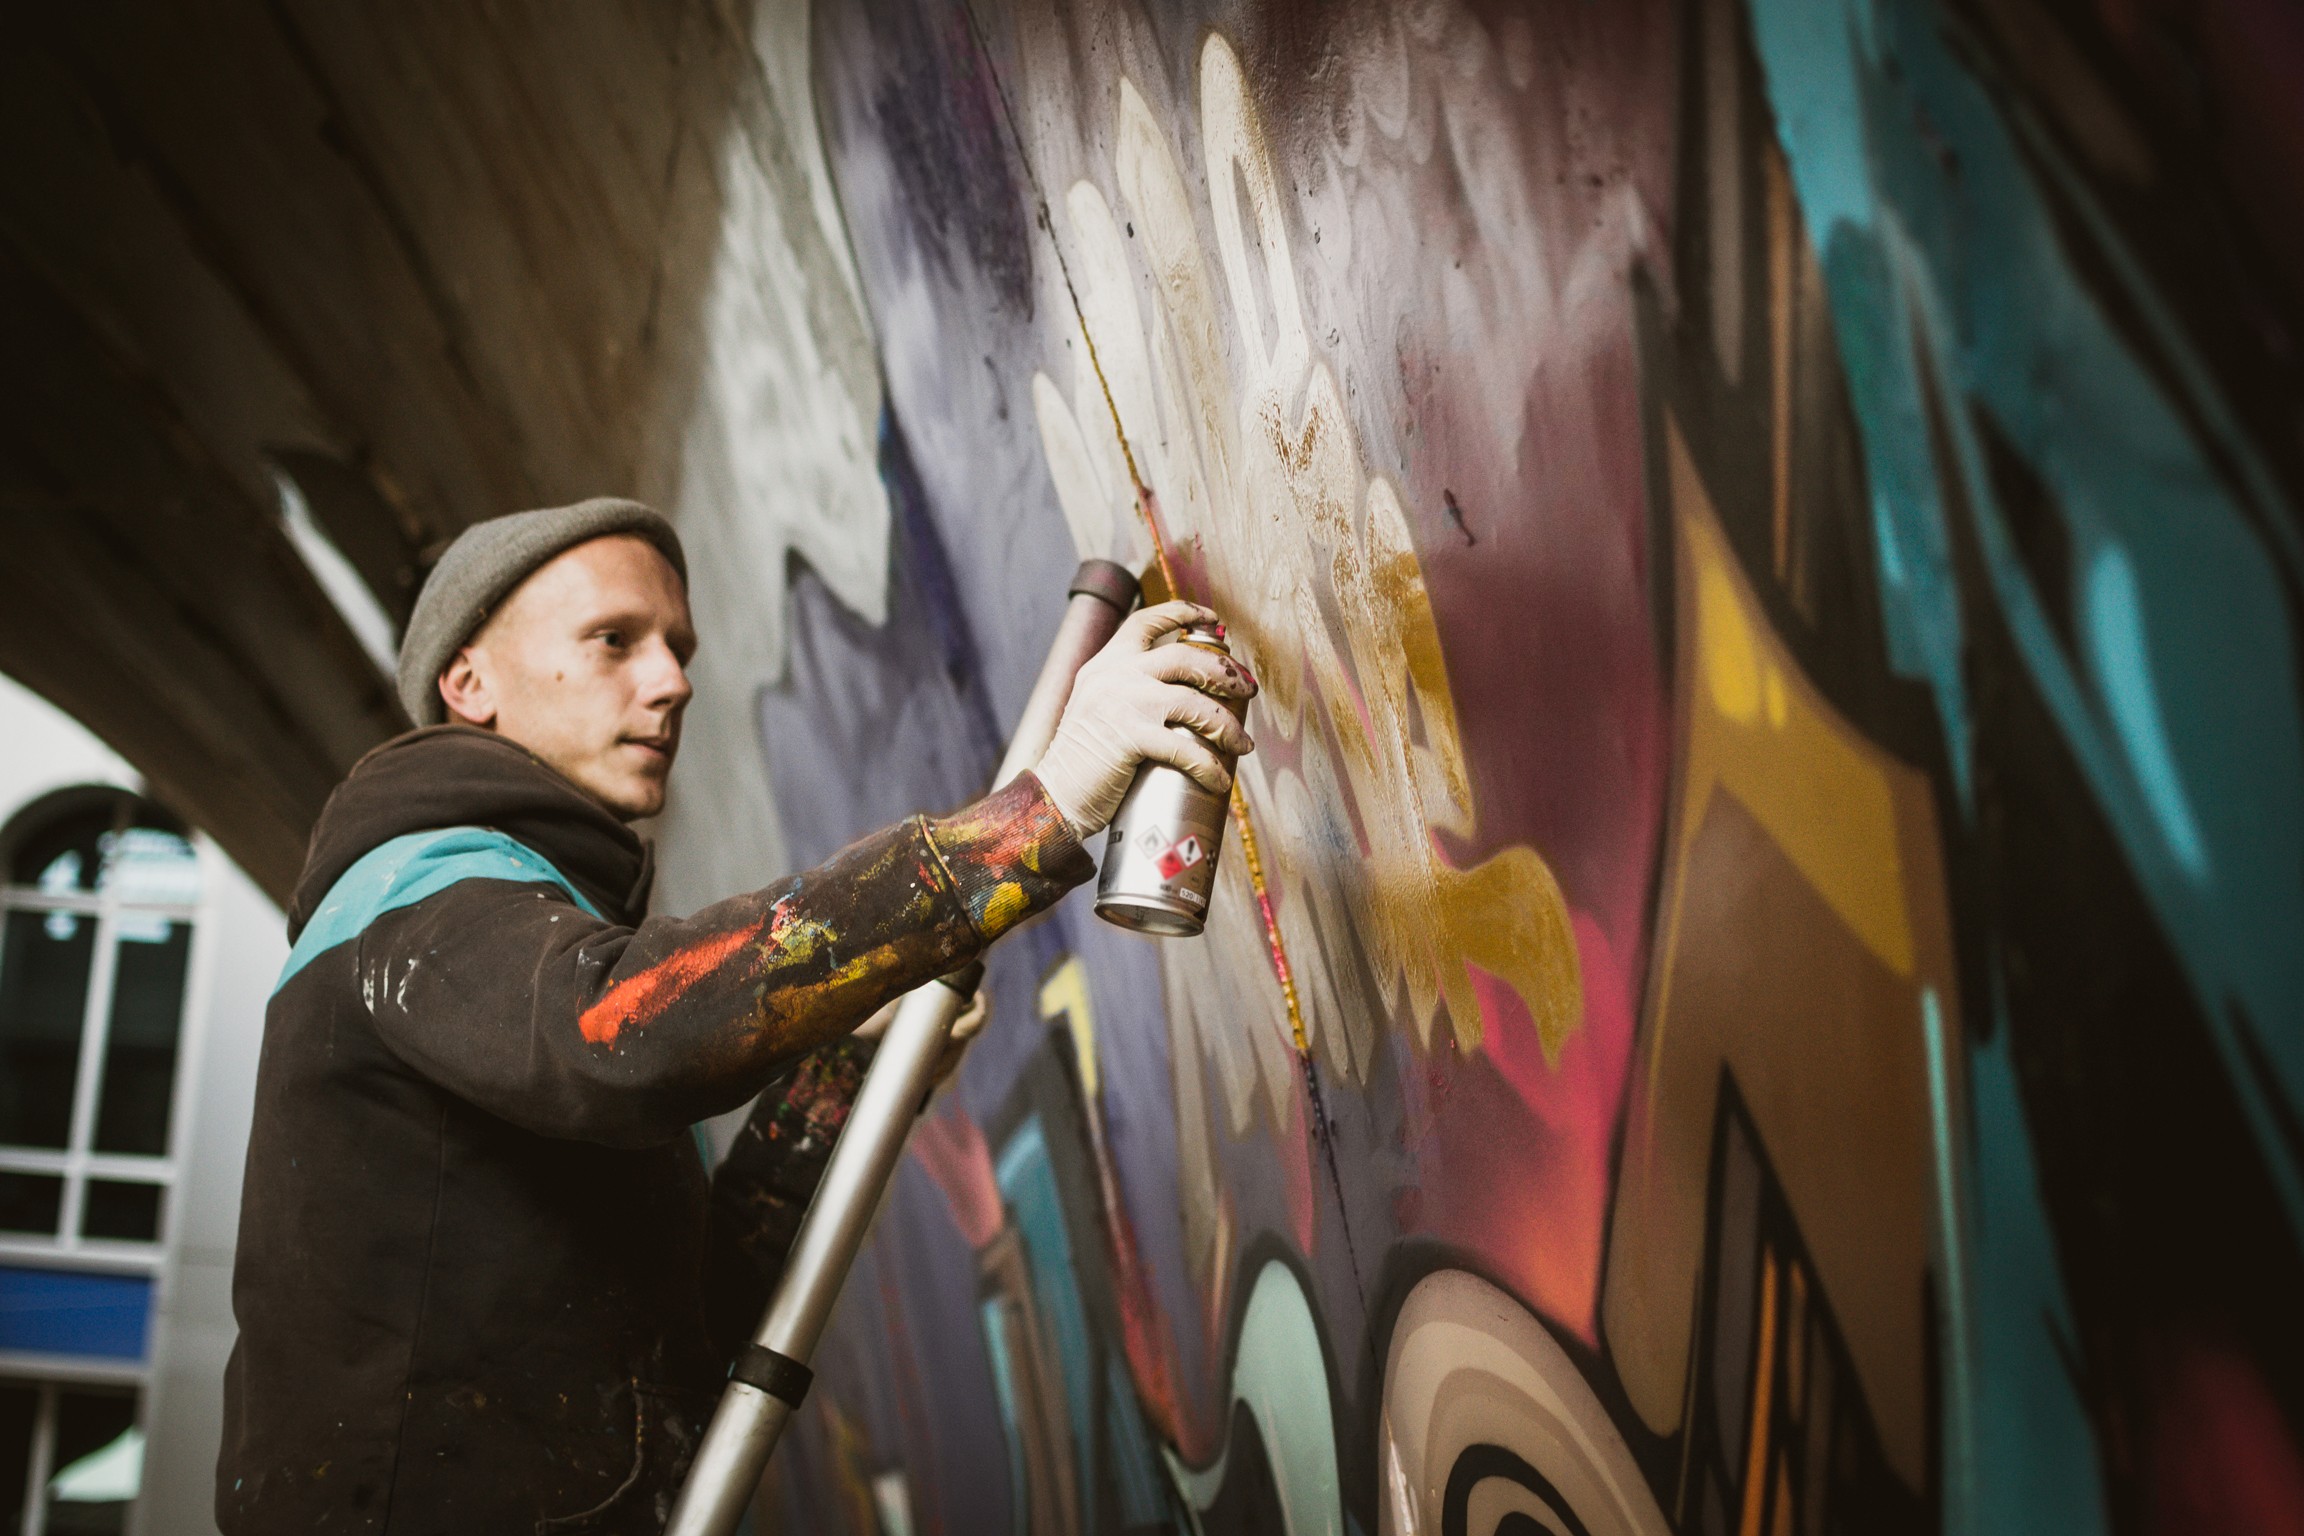 Sneakers Graffiti artist painting a wall